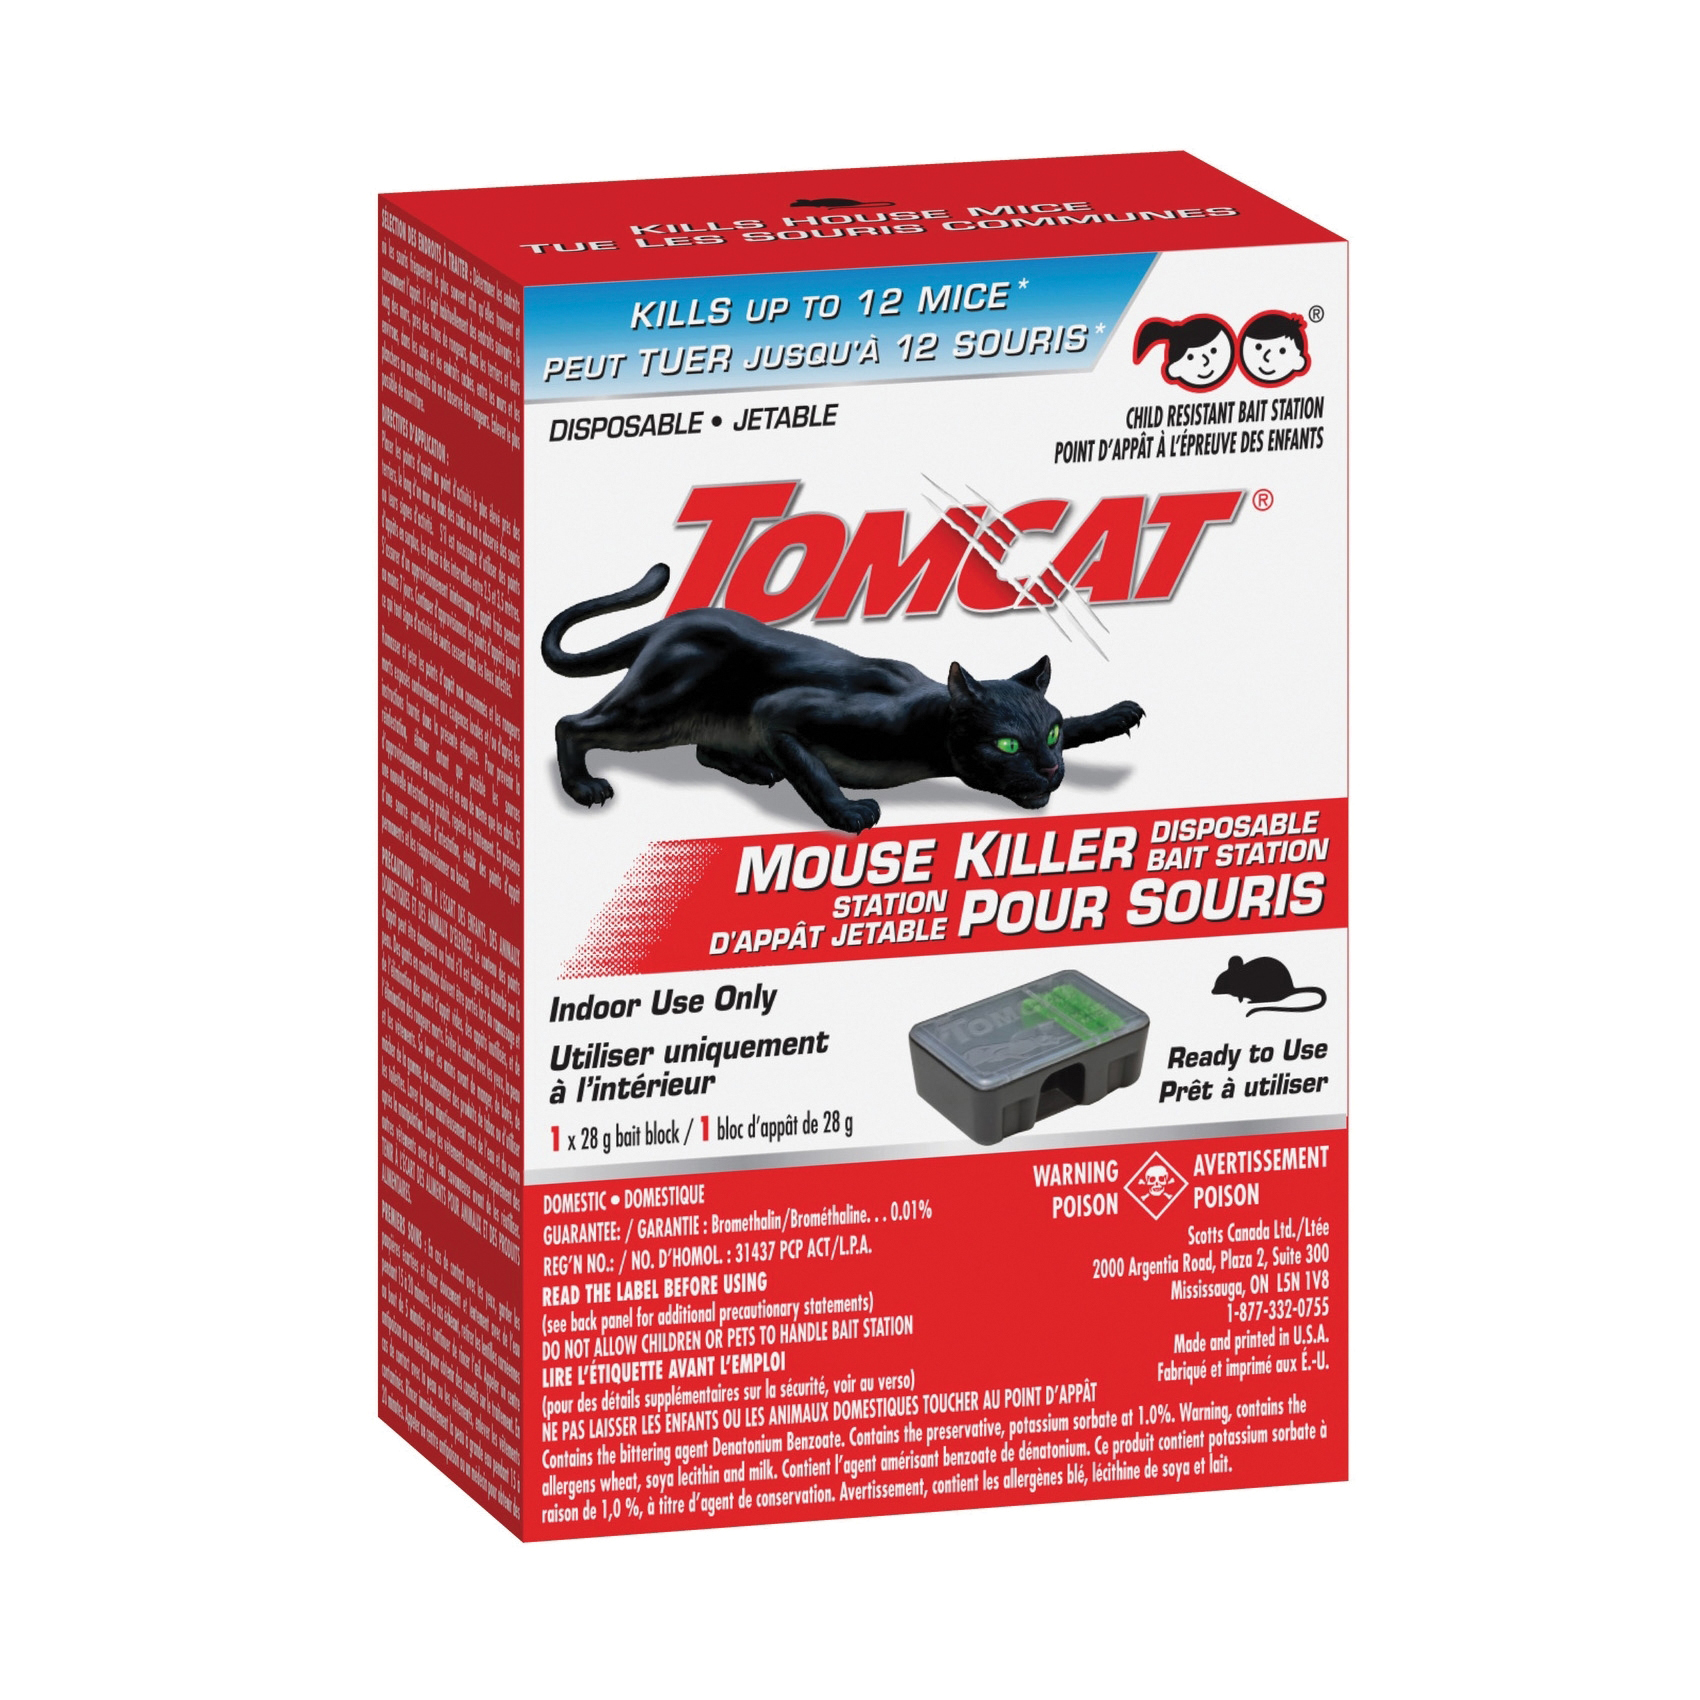 Tomcat Mouse Killer Child Resistant Disposable Station